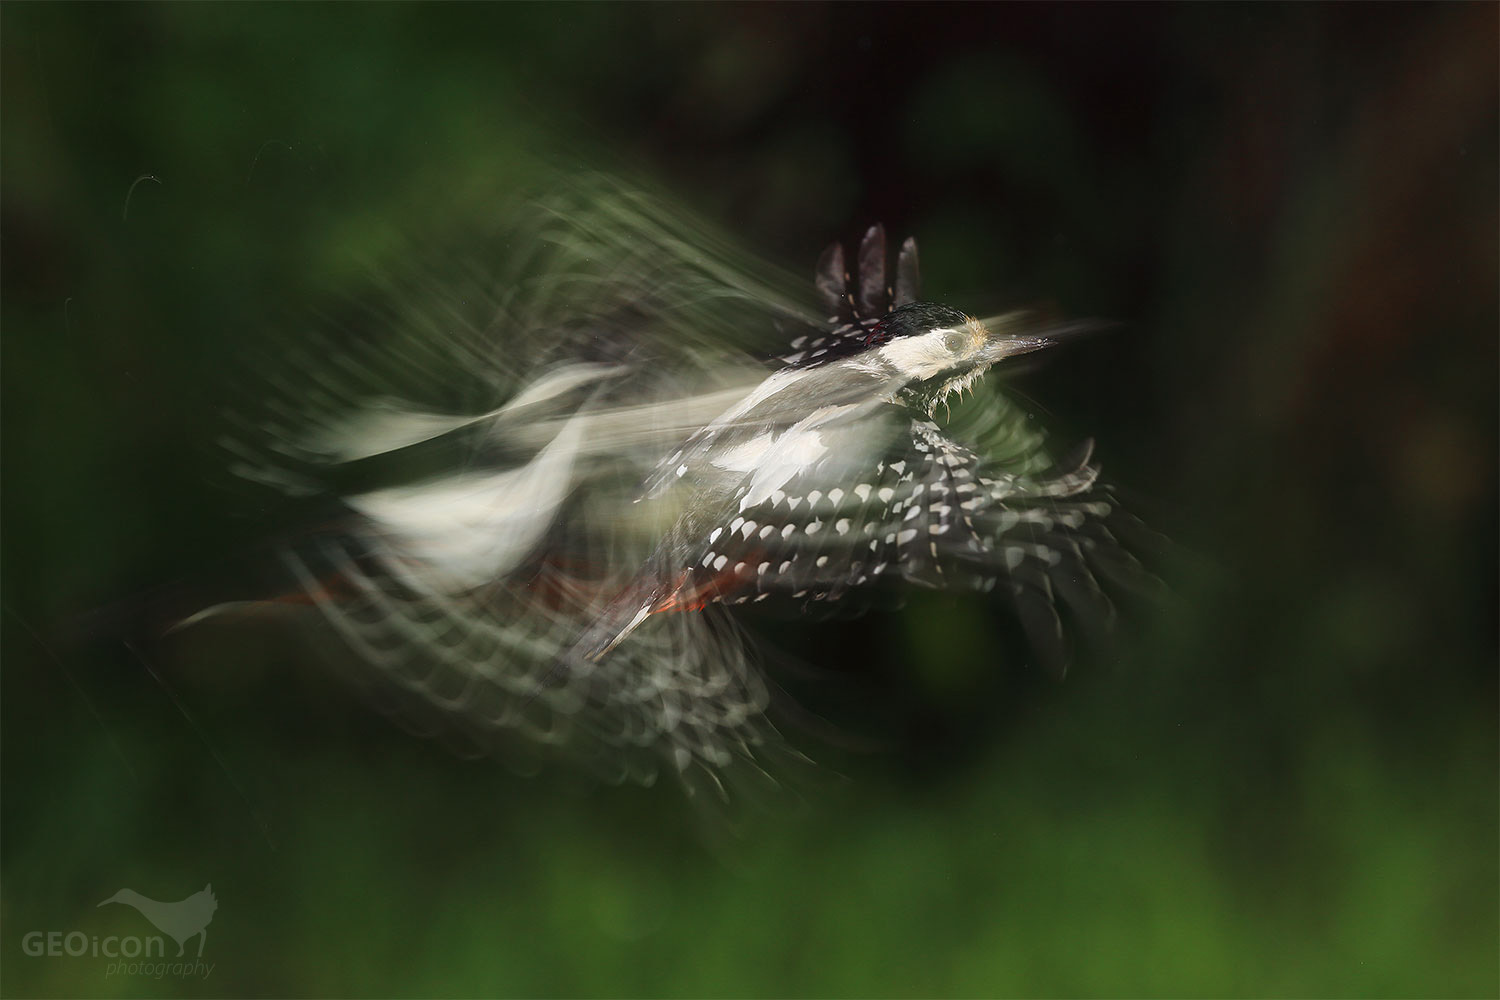 Great spotted woodpecker / strakapoud velký (Dendrocopos major)